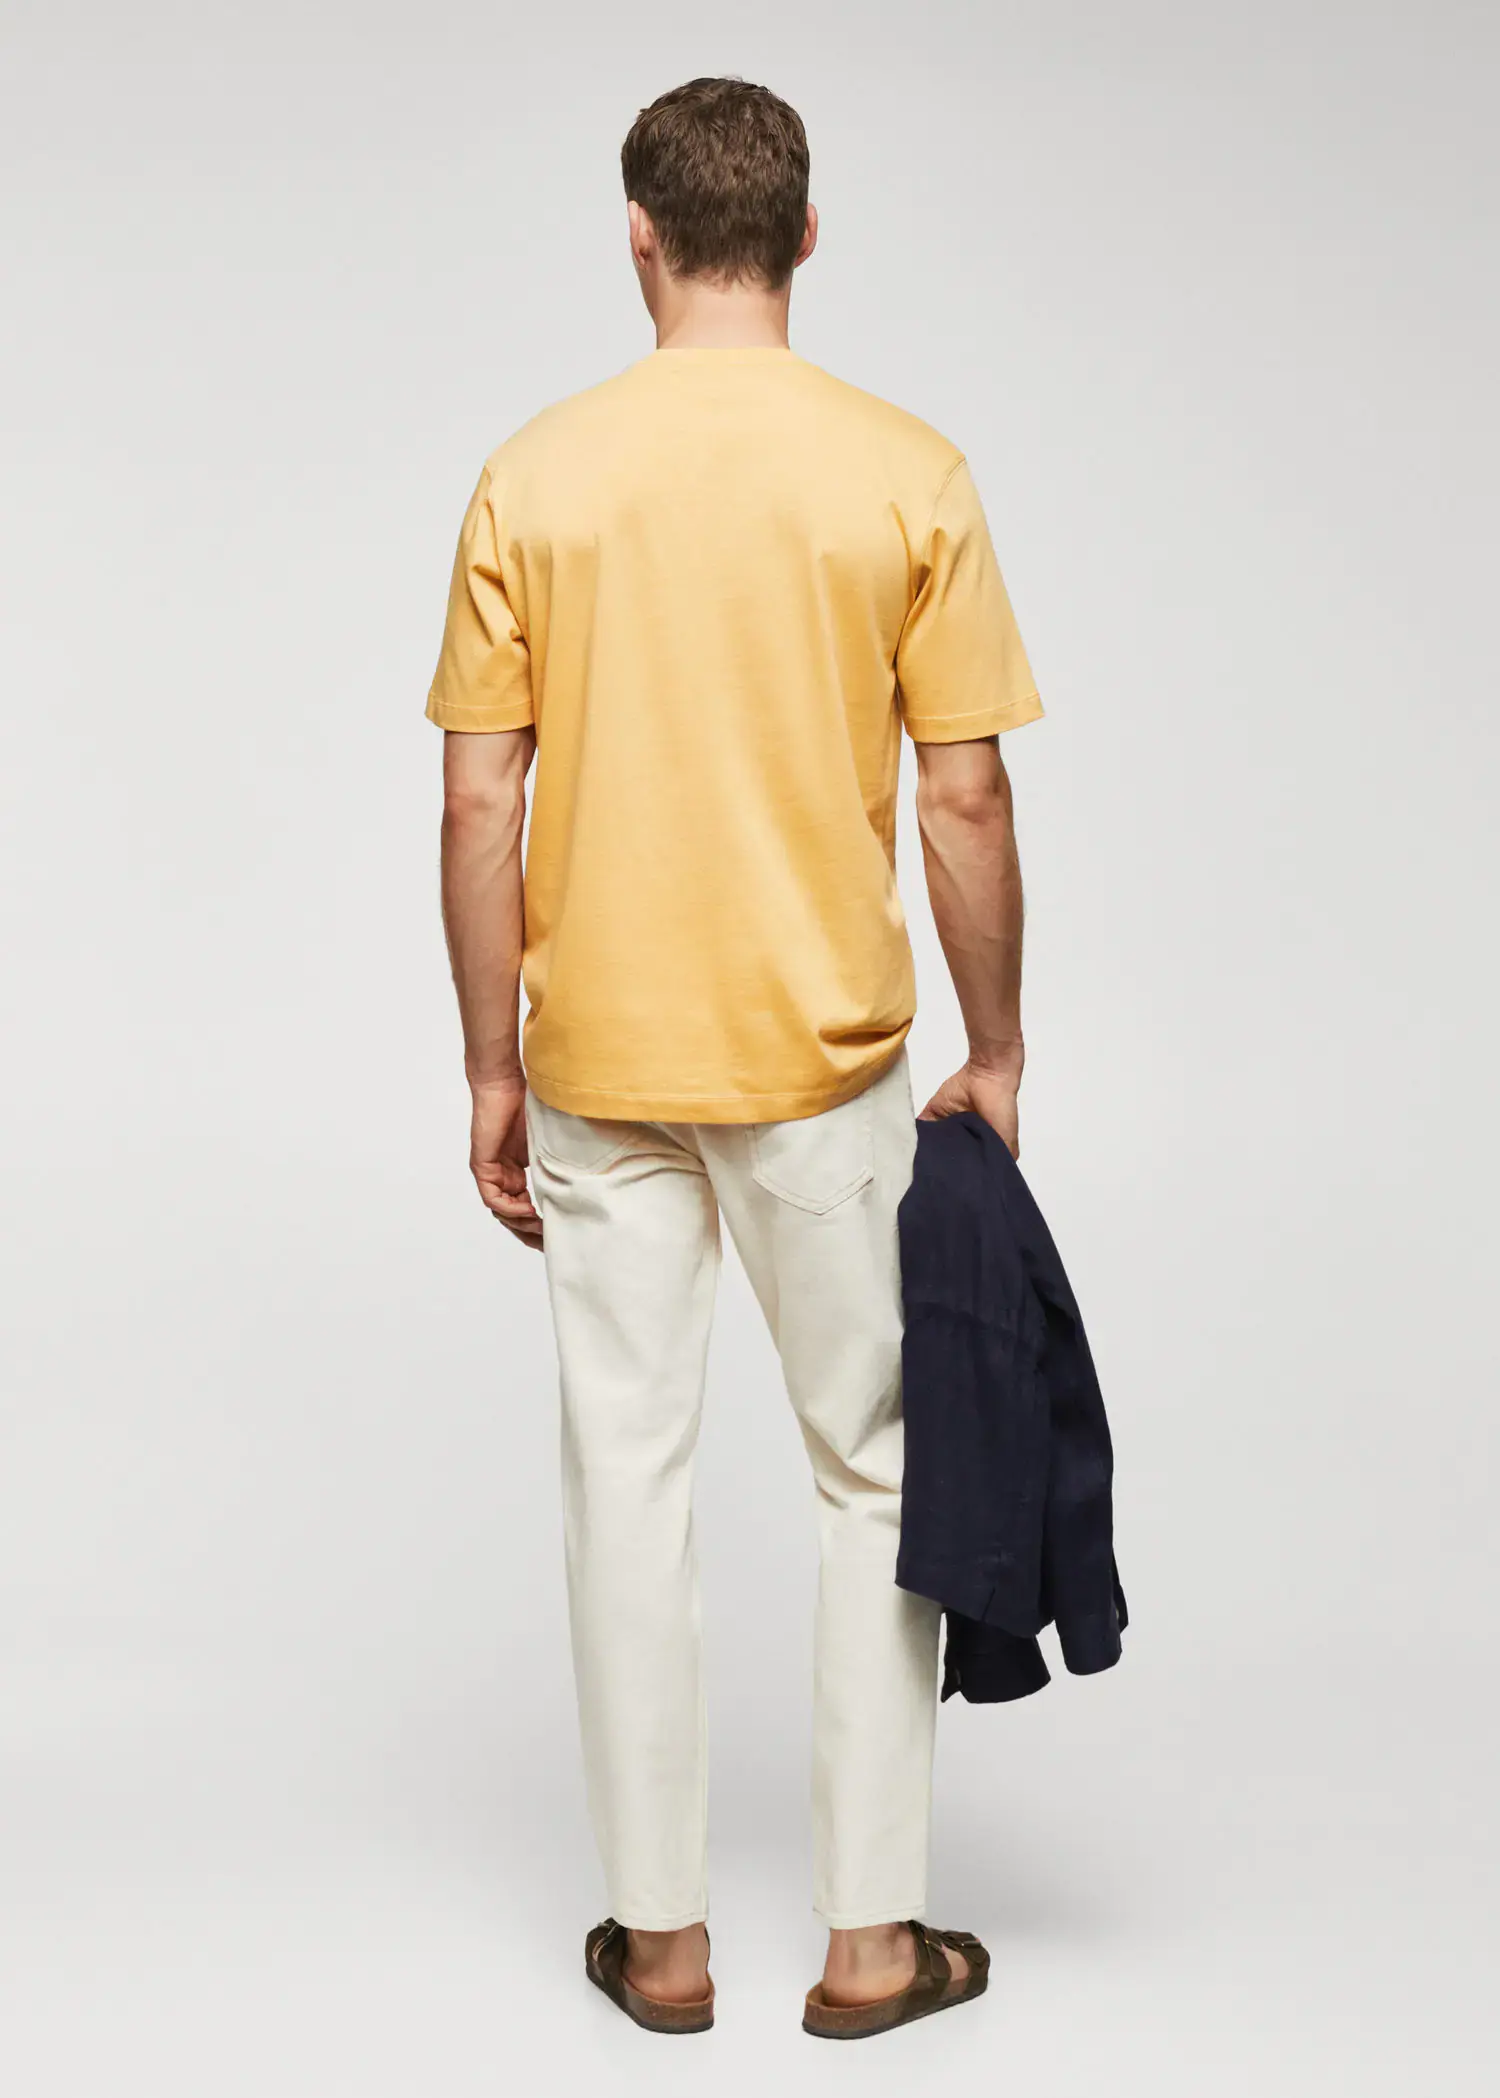 Mango Adriana Eskenazi x Mango t-shirt. a man in a yellow shirt holding a jacket. 